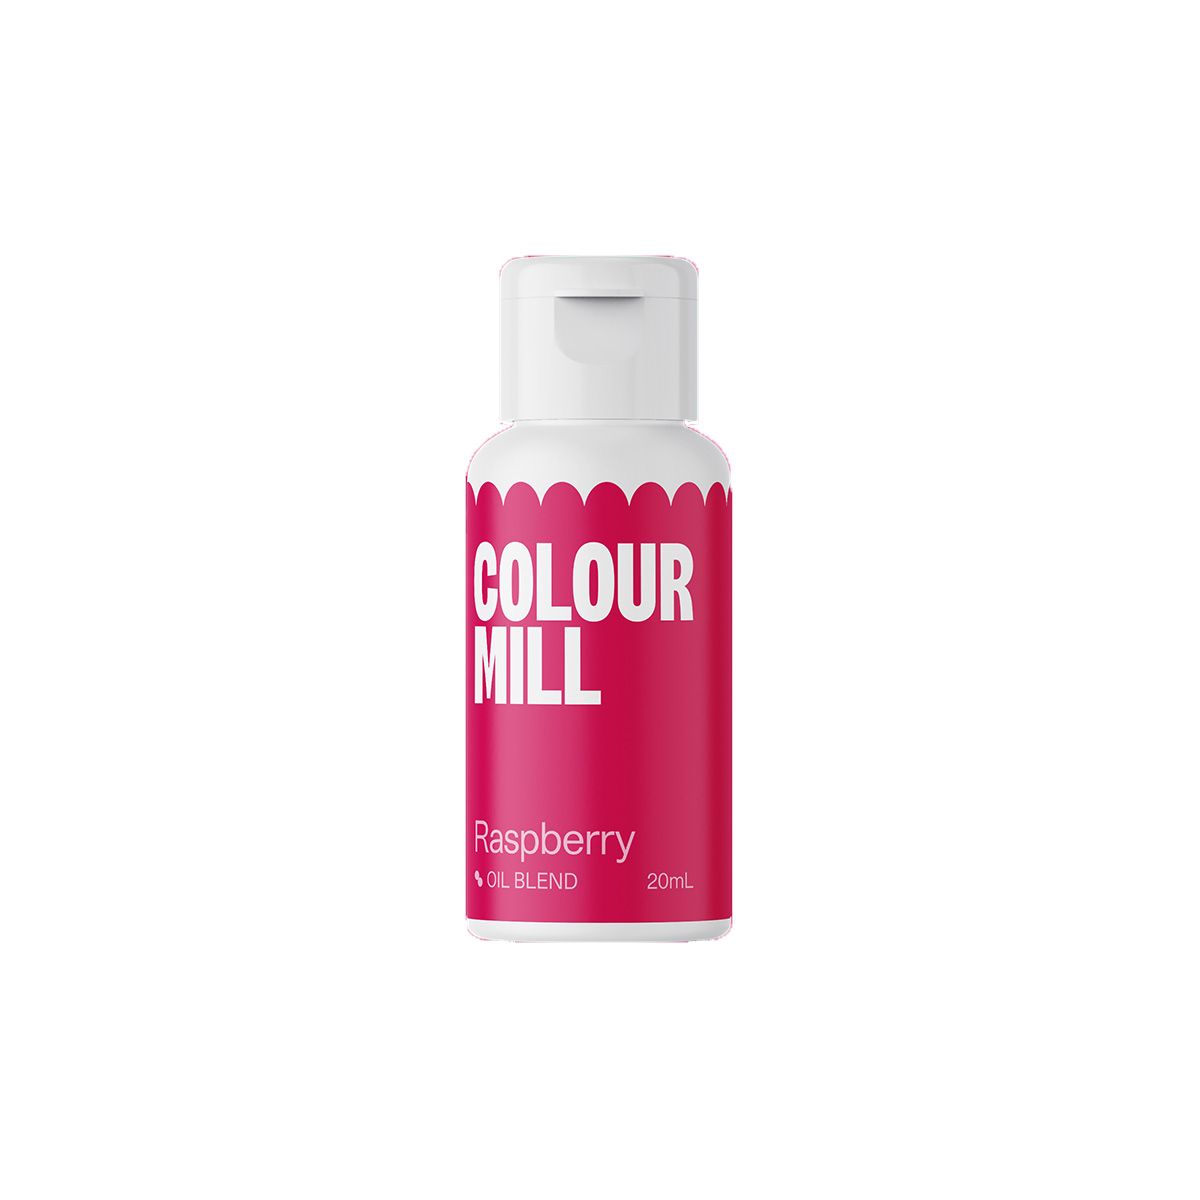 Colour Mill Oil Blend Raspberry 20ml